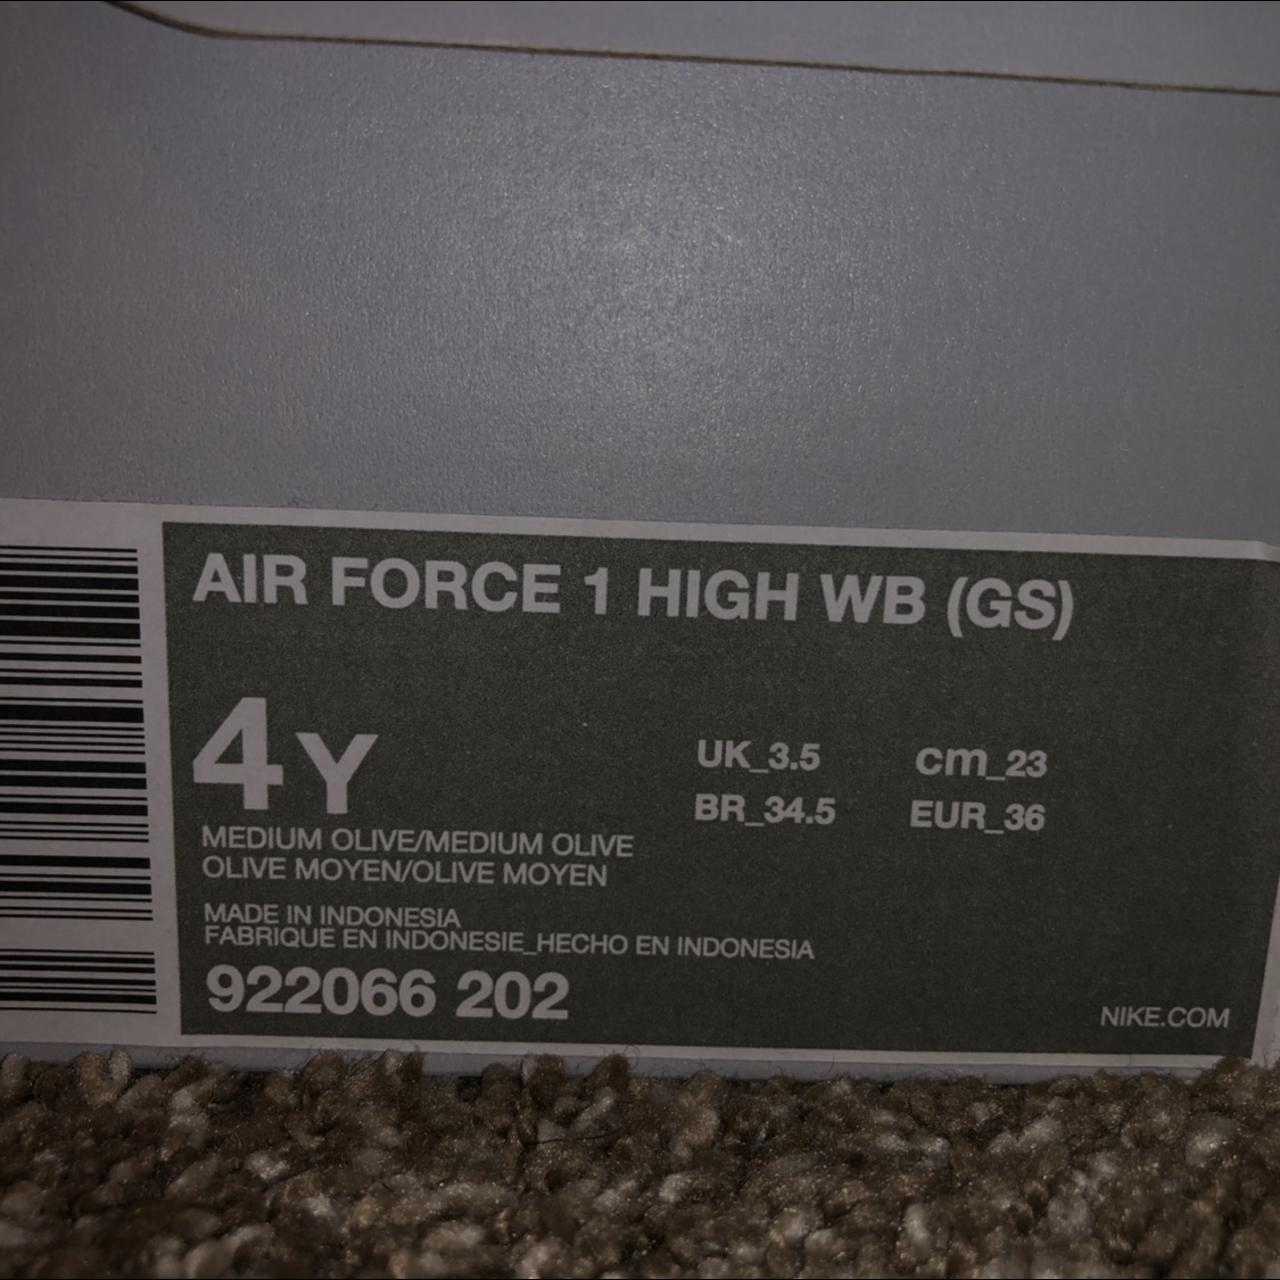 Buy Air Force 1 High WB GS 'Medium Olive' - 922066 202